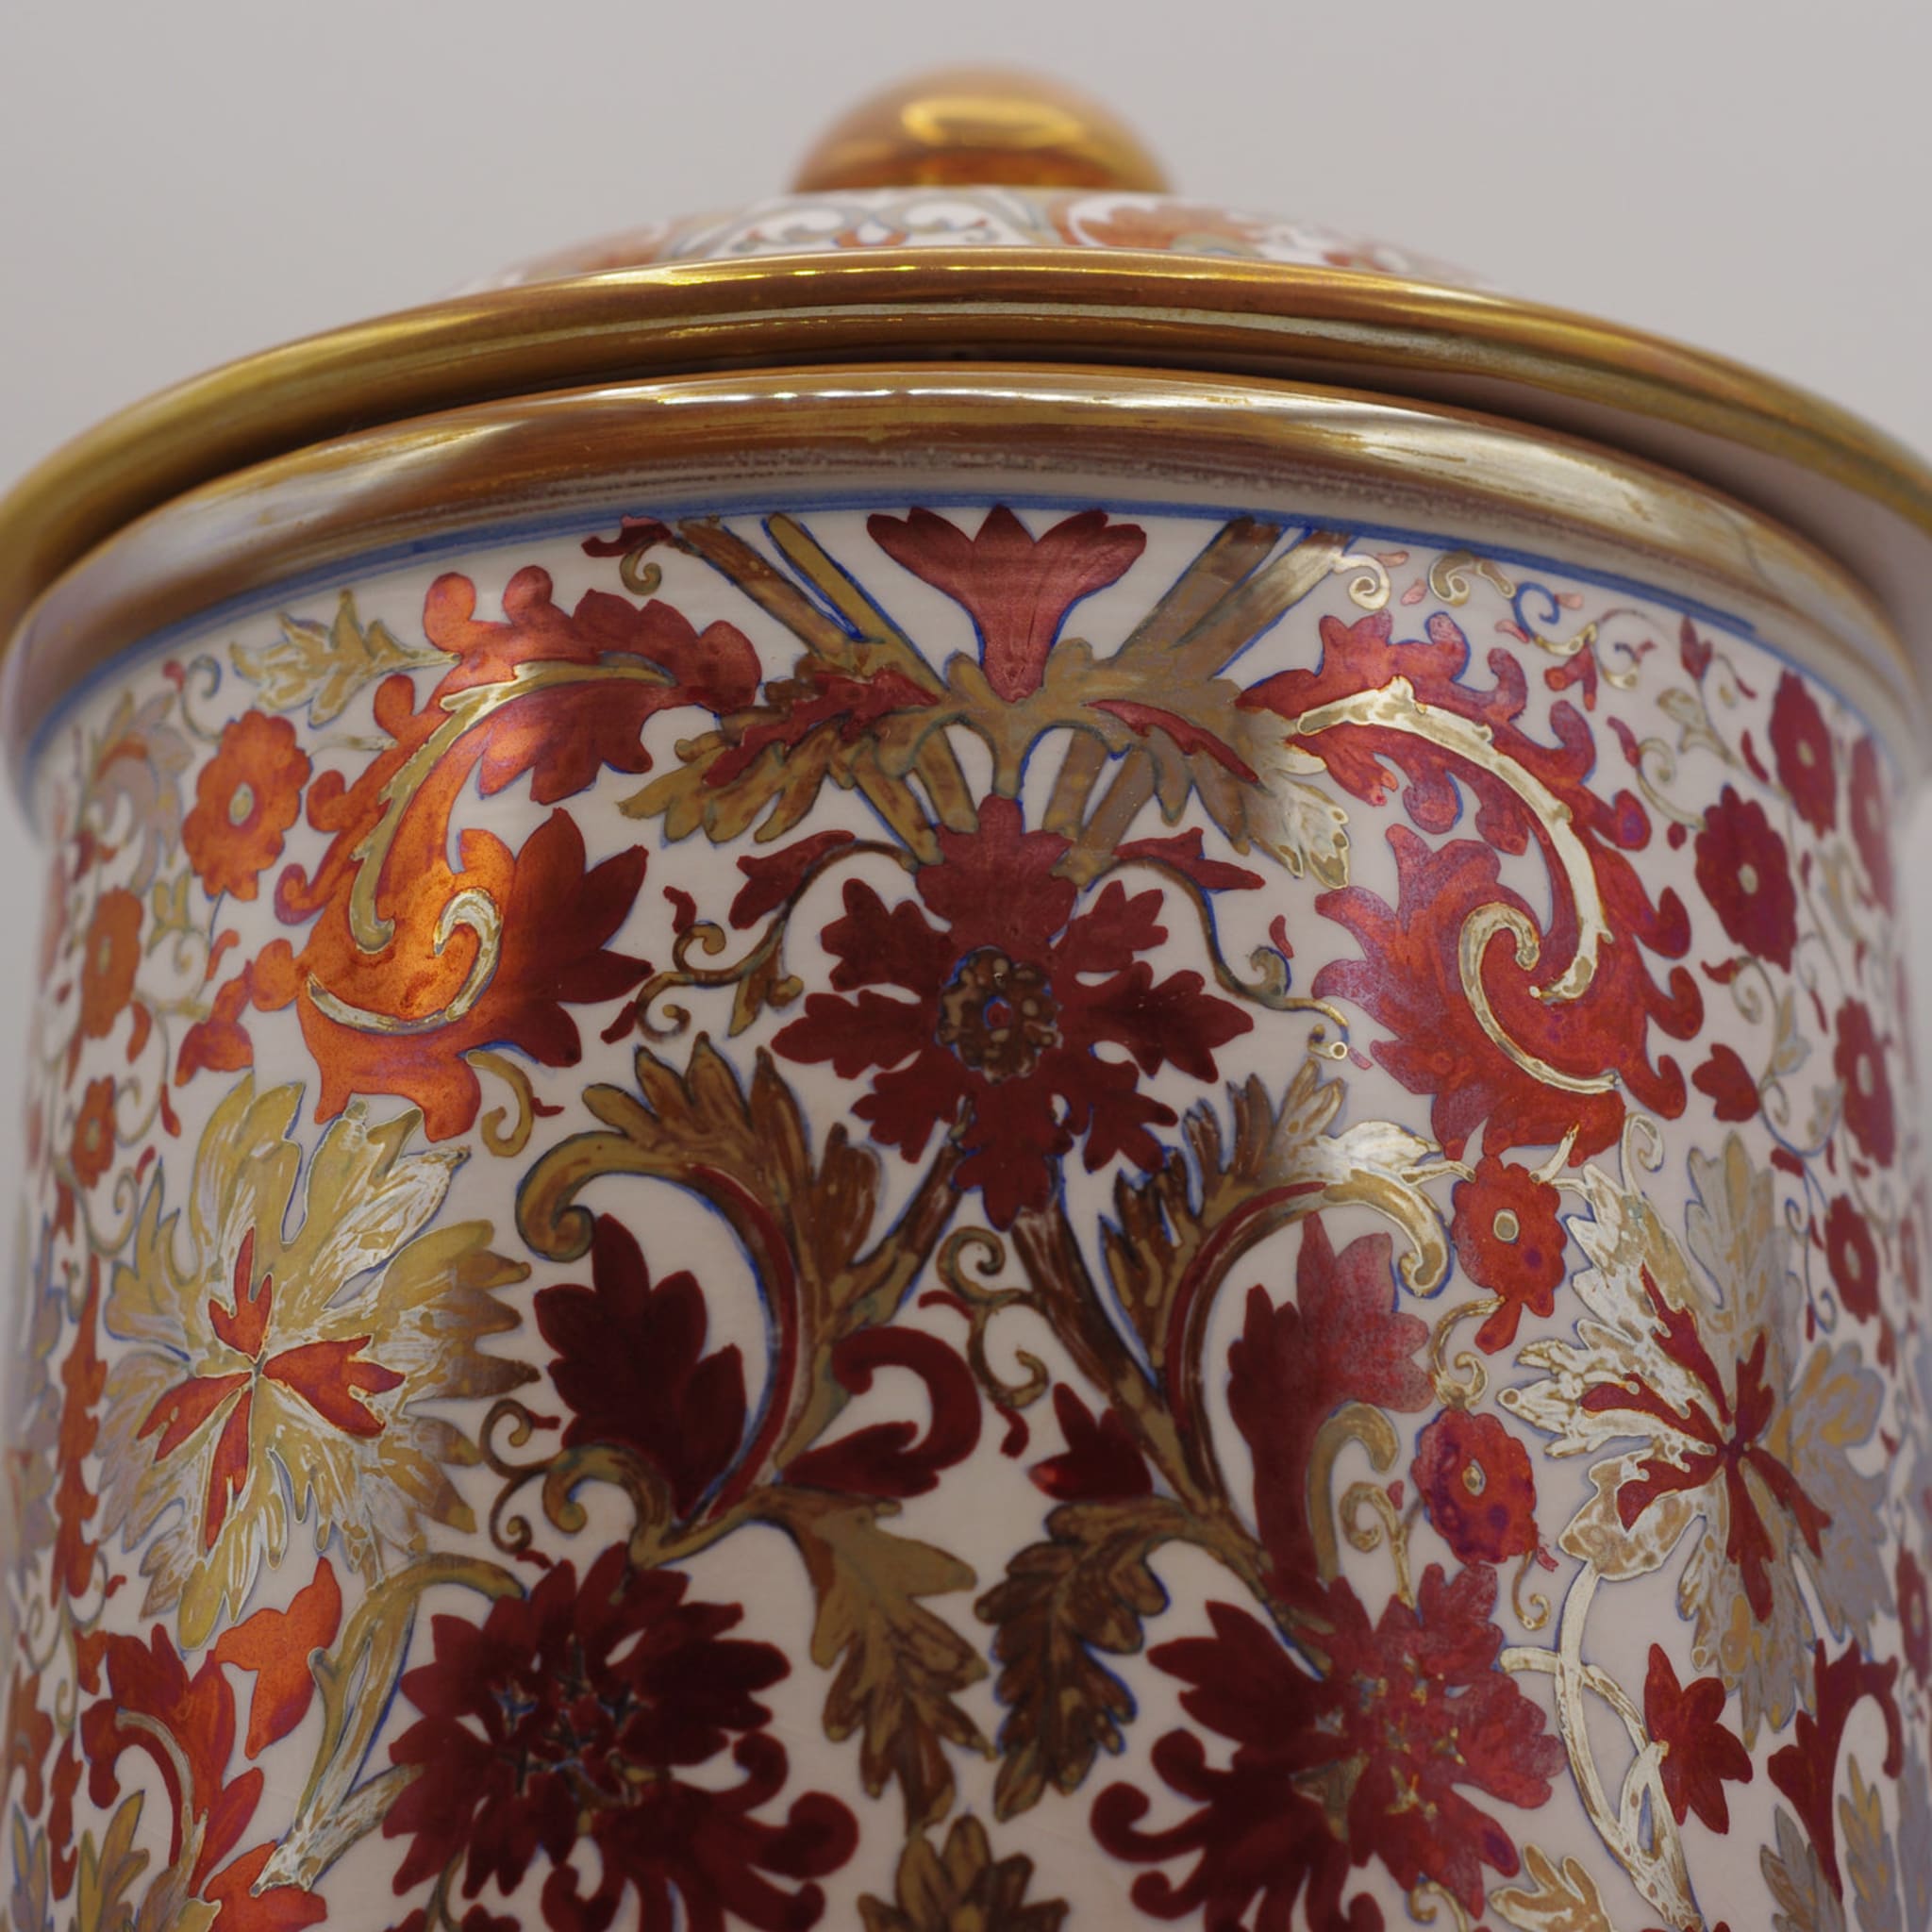 Albarello Jar with Floral Decoration - Alternative view 1